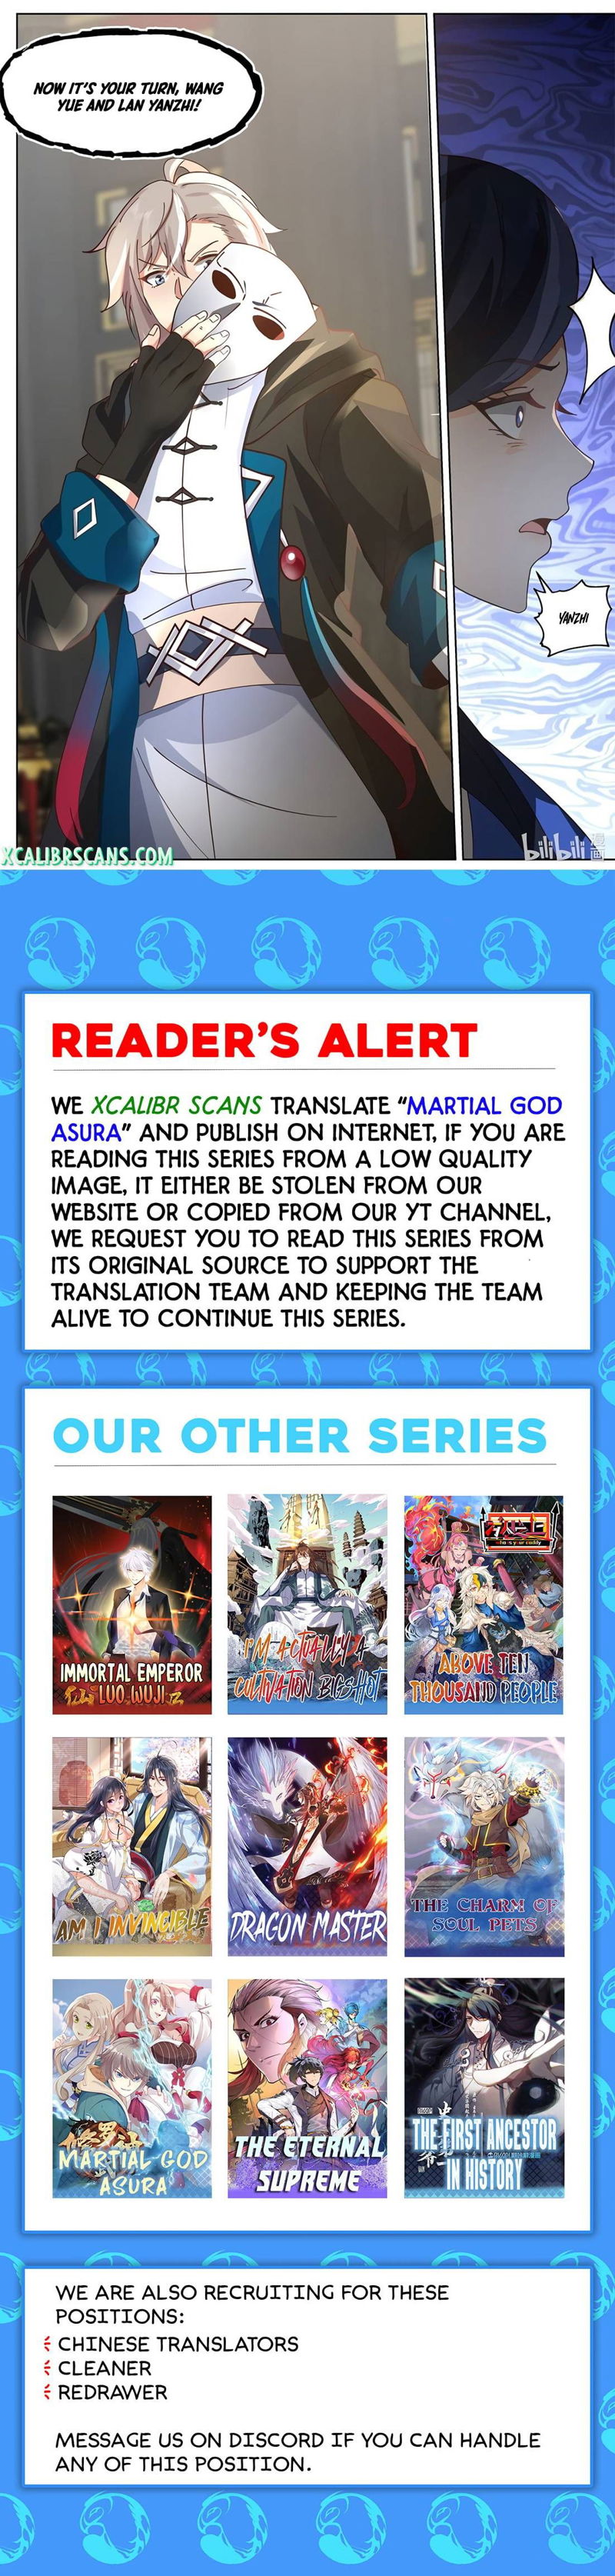 Martial God Asura Chapter 503 page 10